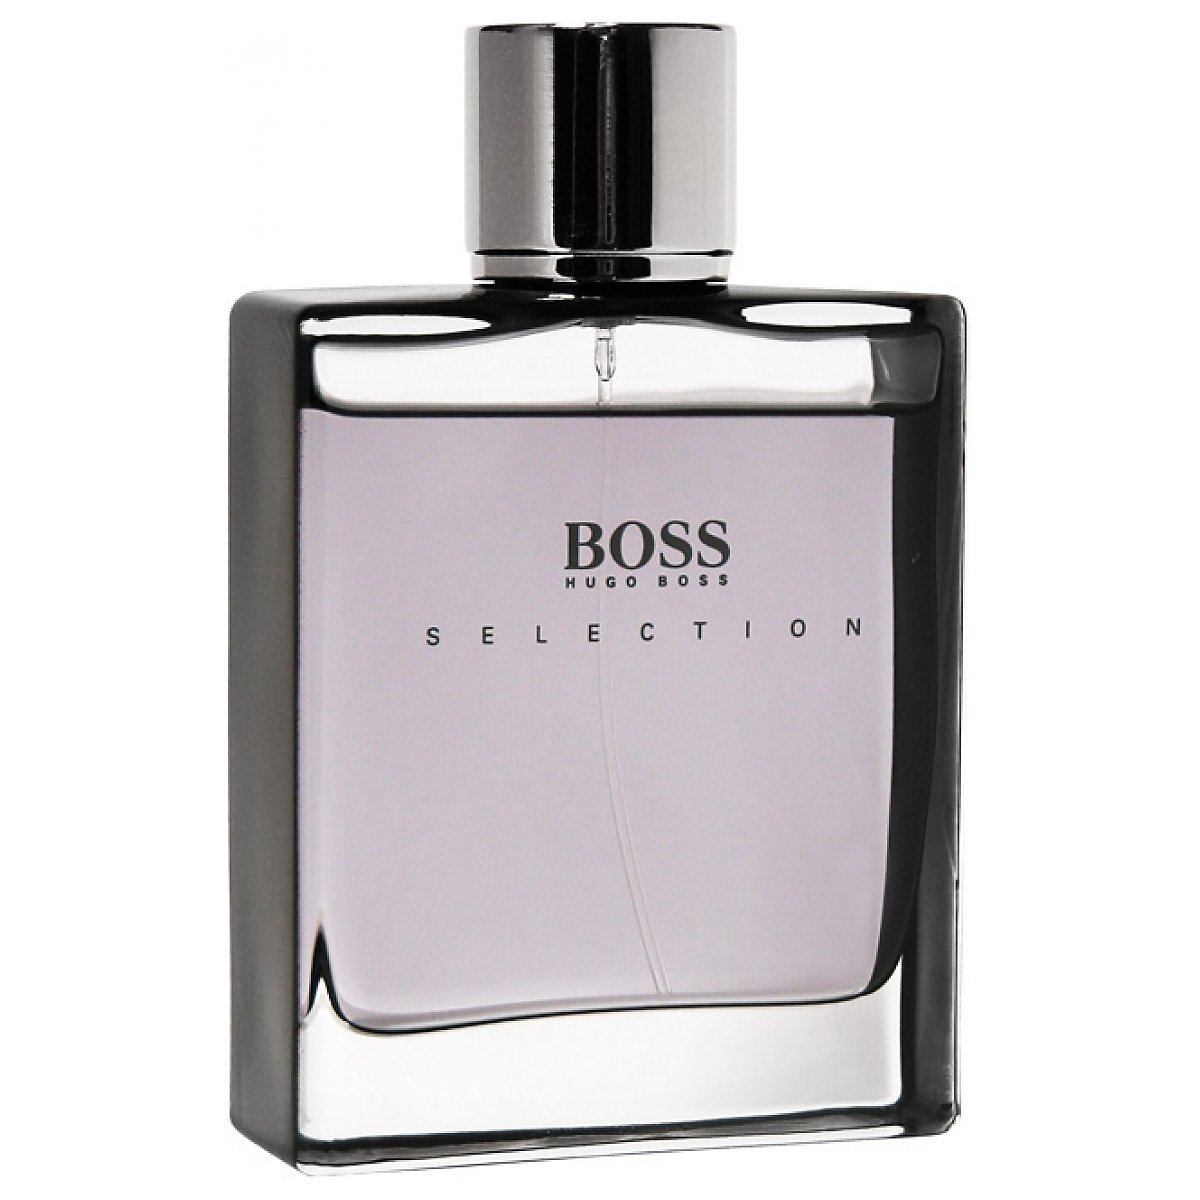 Hugo Boss BOSS Selection Woda toaletowa spray 90ml - Perfumeria Dolce.pl